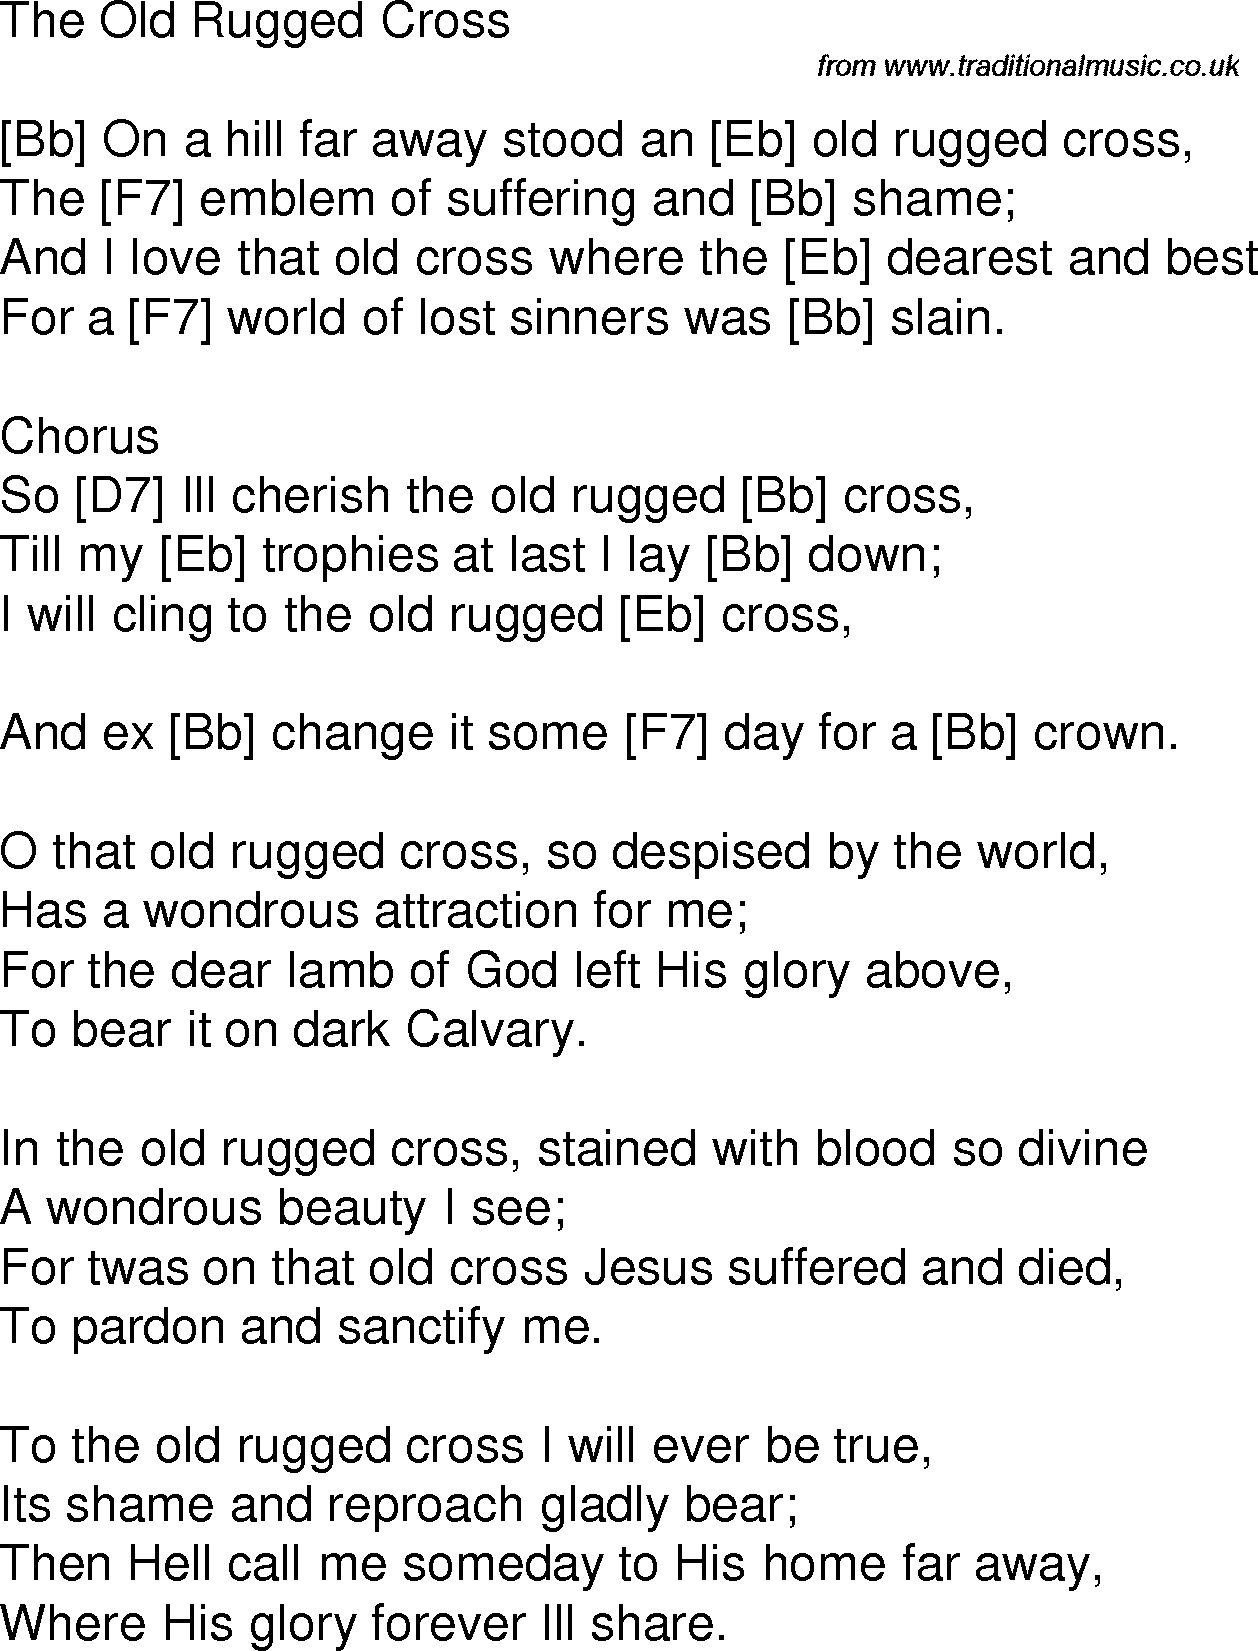 The Old Rugged Cross Lyrics Printable